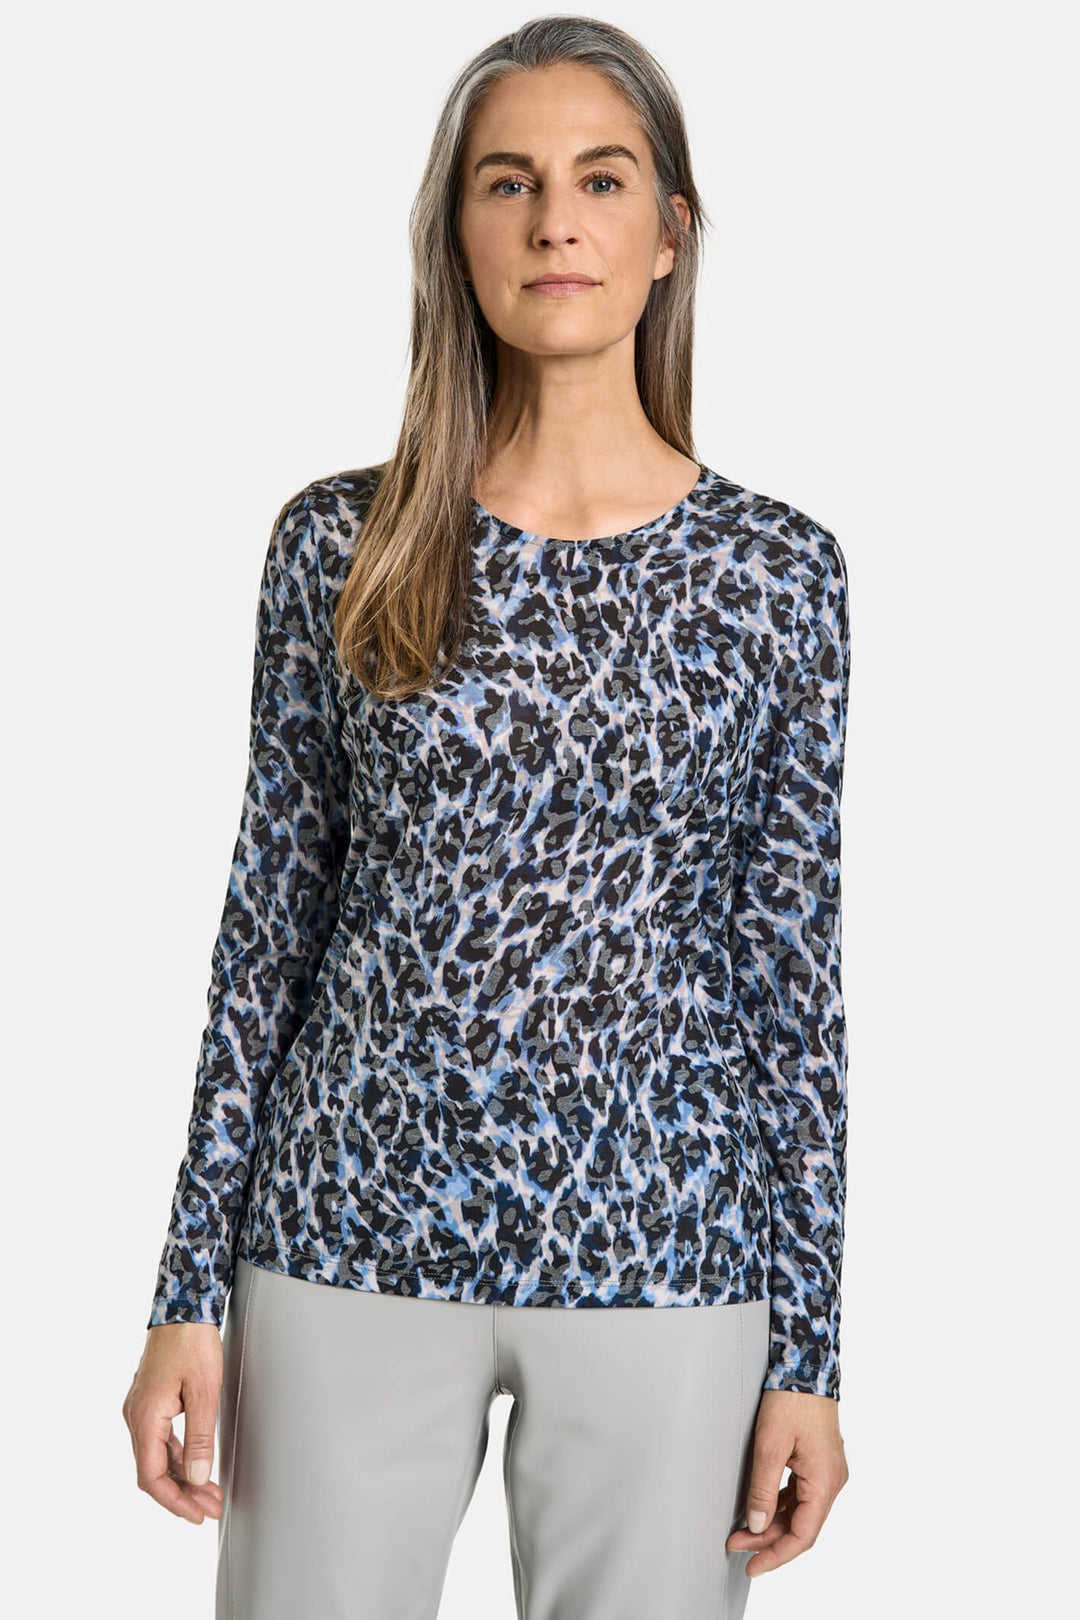 Gerry Weber 170055-44004 Blue Black Leopard Print Long Sleeve Top